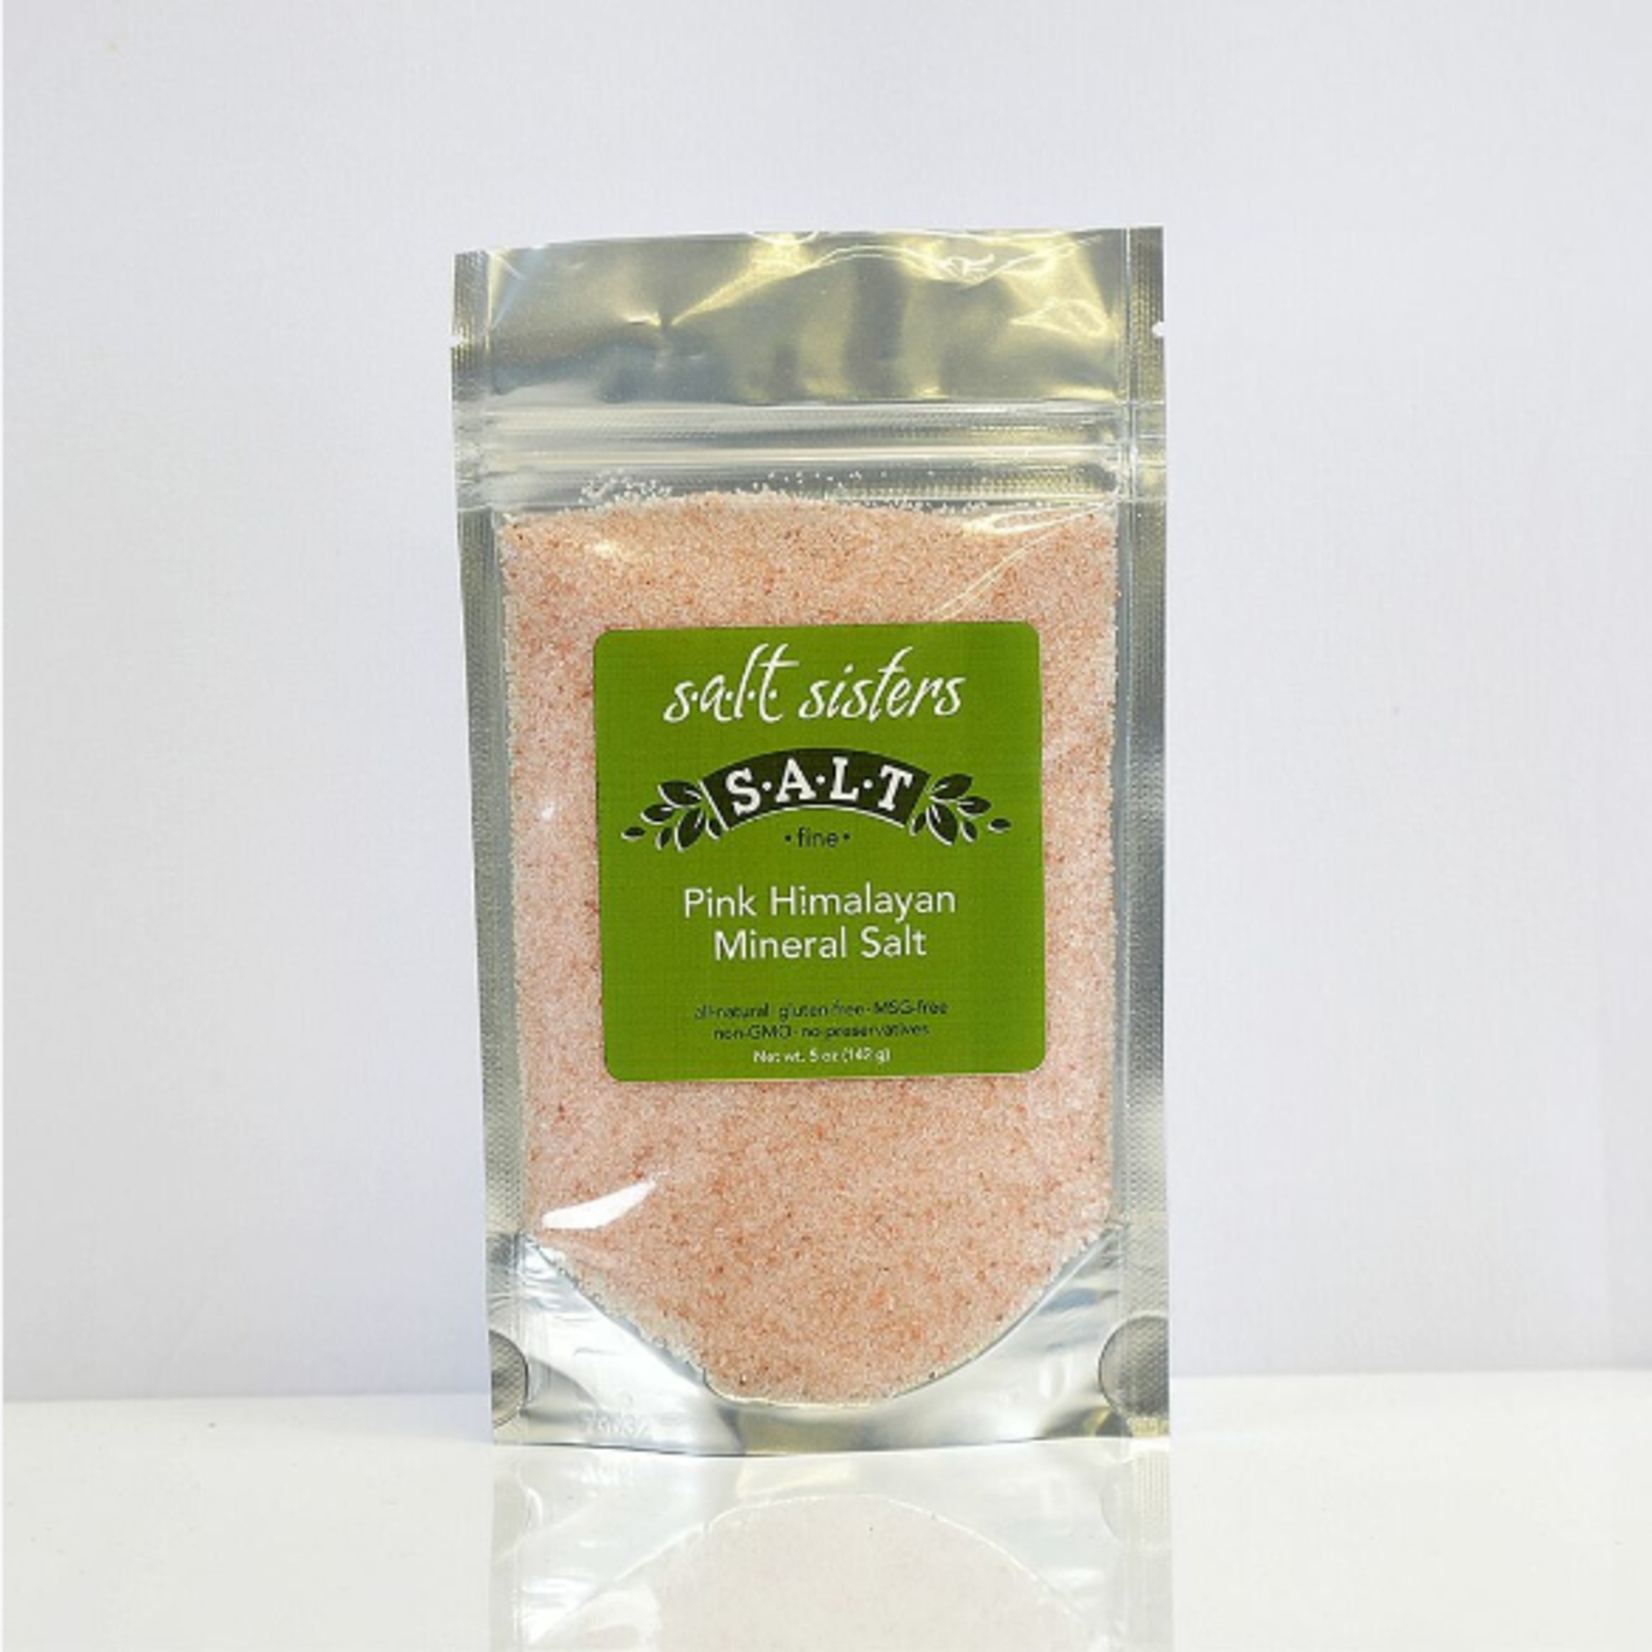 Salt Sisters Pink Himalayan Mineral Salt, fine